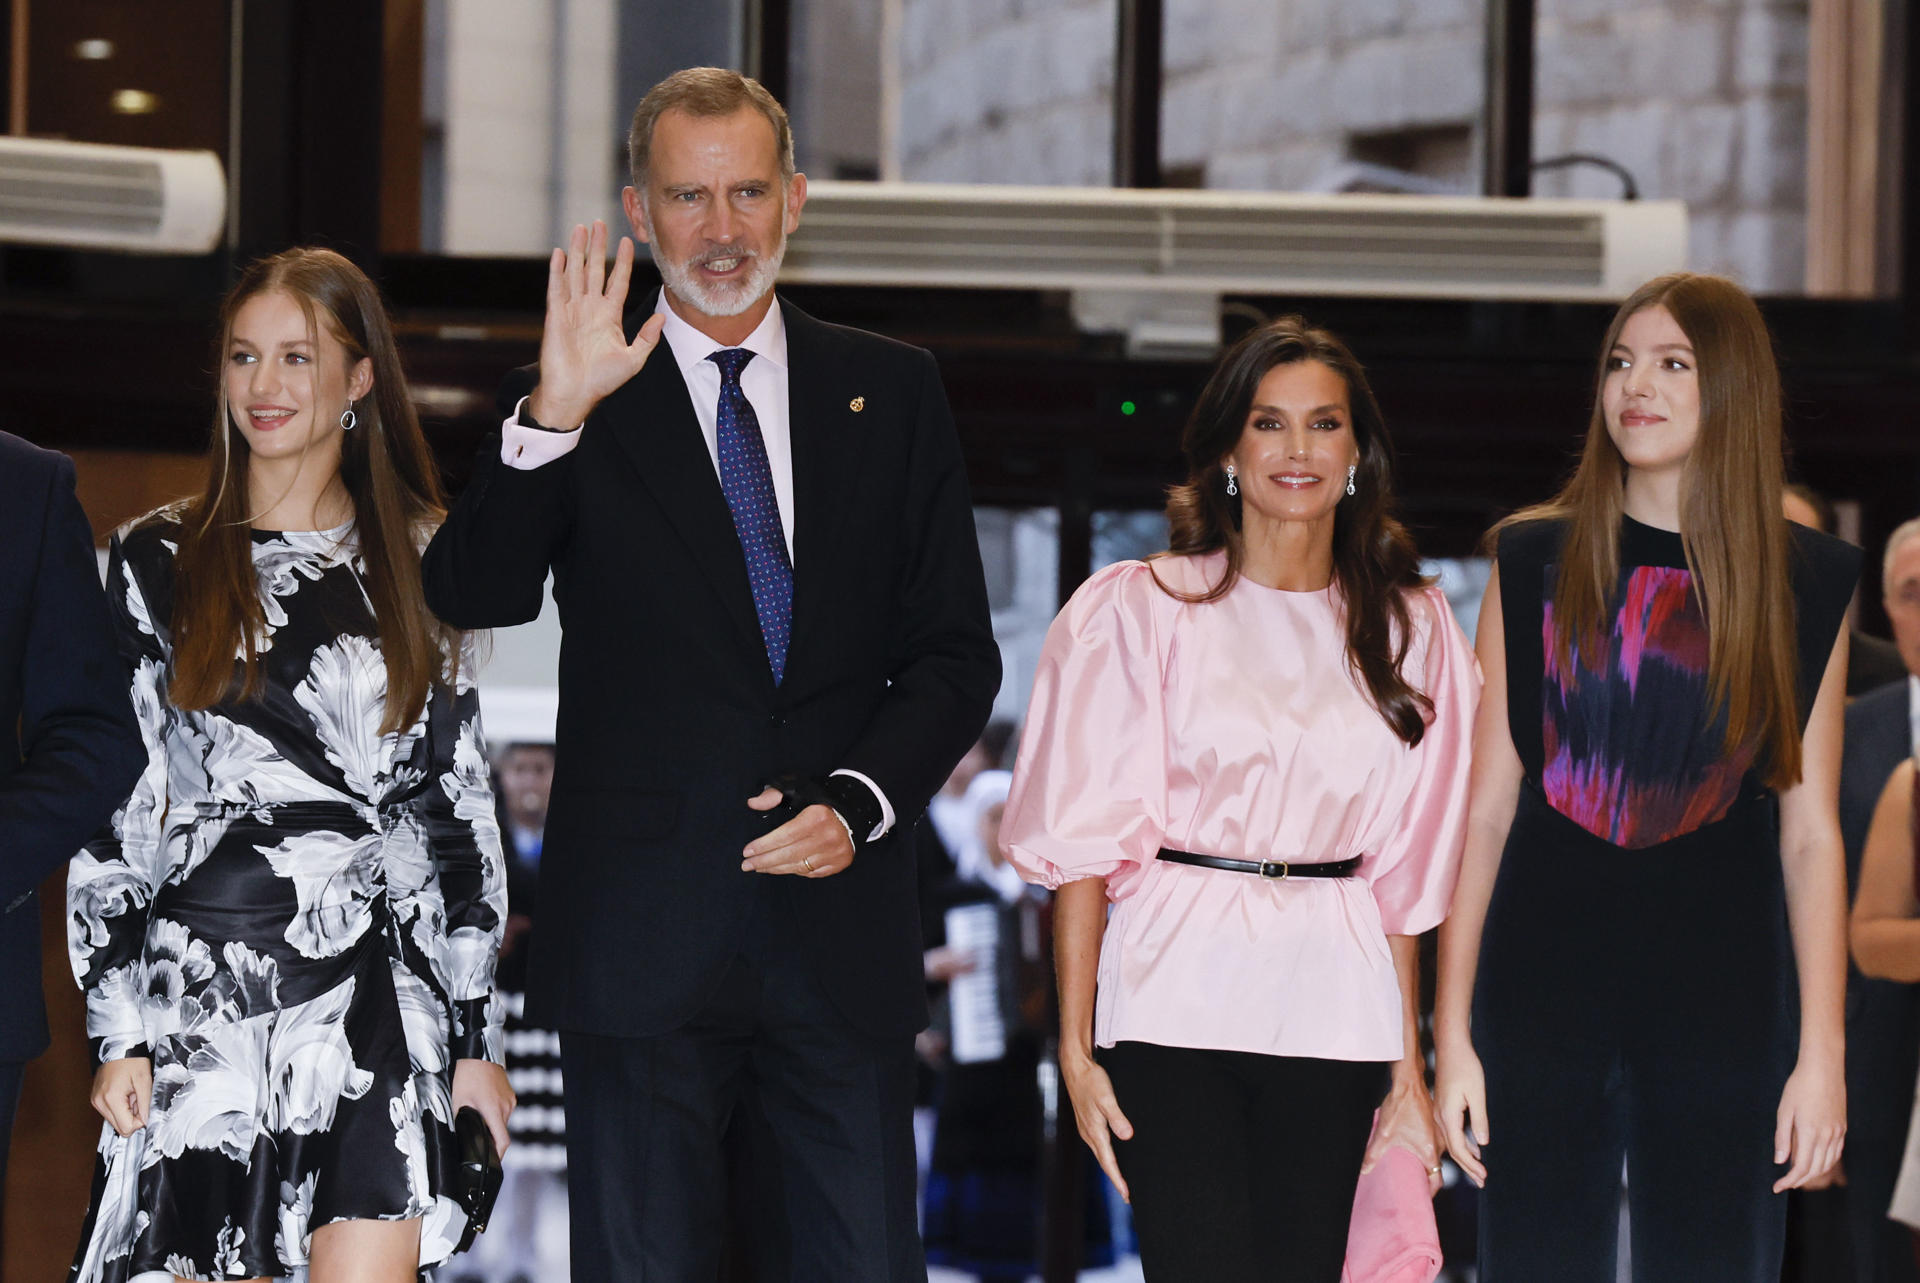 The Royal Family attends the Princess of Asturias Awards “Peace” Gala